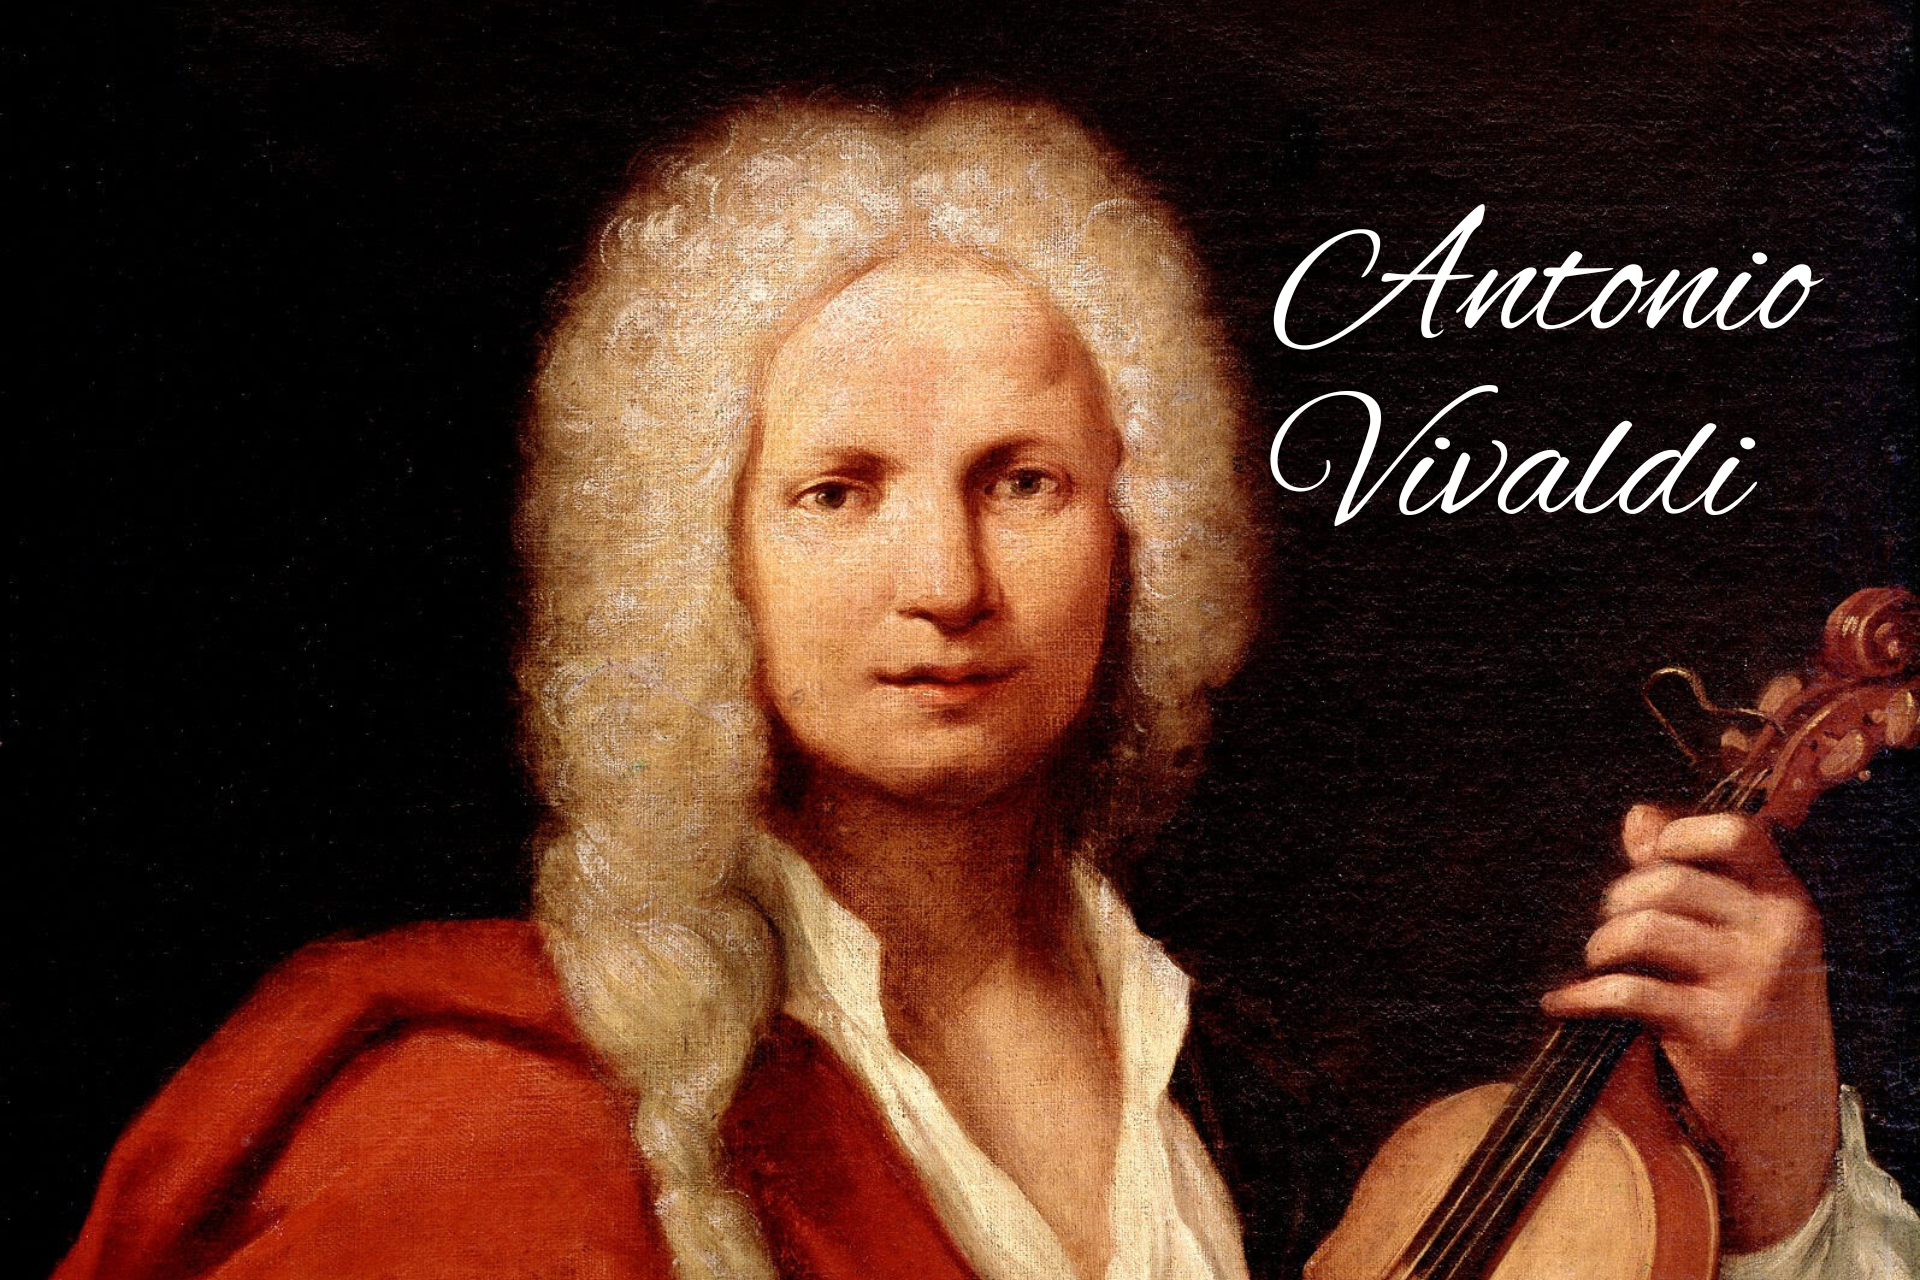 Antonio Vivaldi: Maestro of the Baroque Era and Virtuoso Violinist